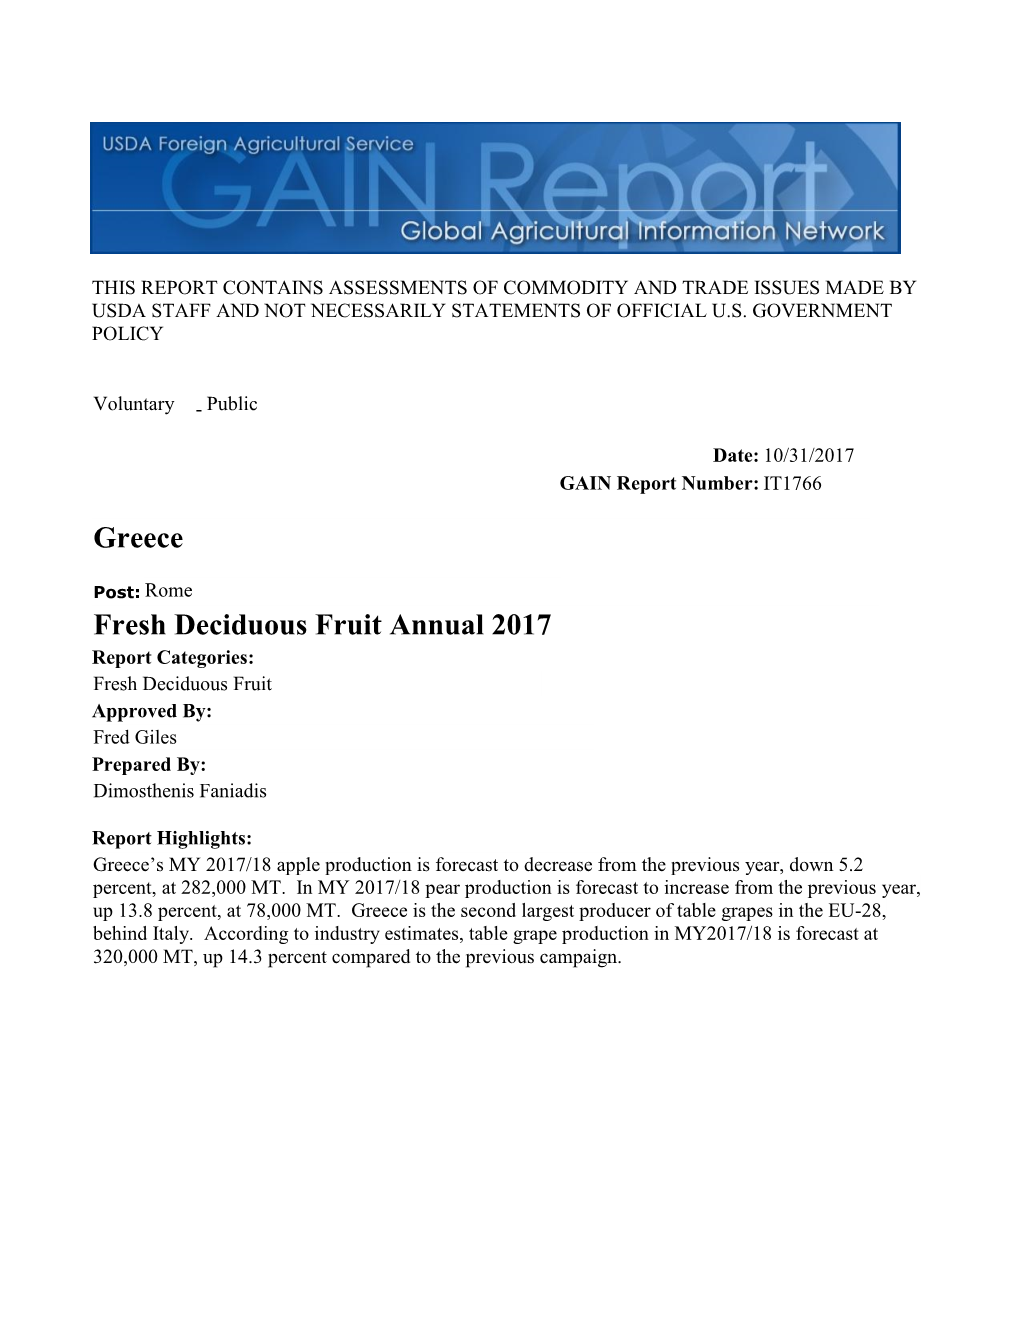 Greece: Fresh Deciduous Fruit Annual 2017